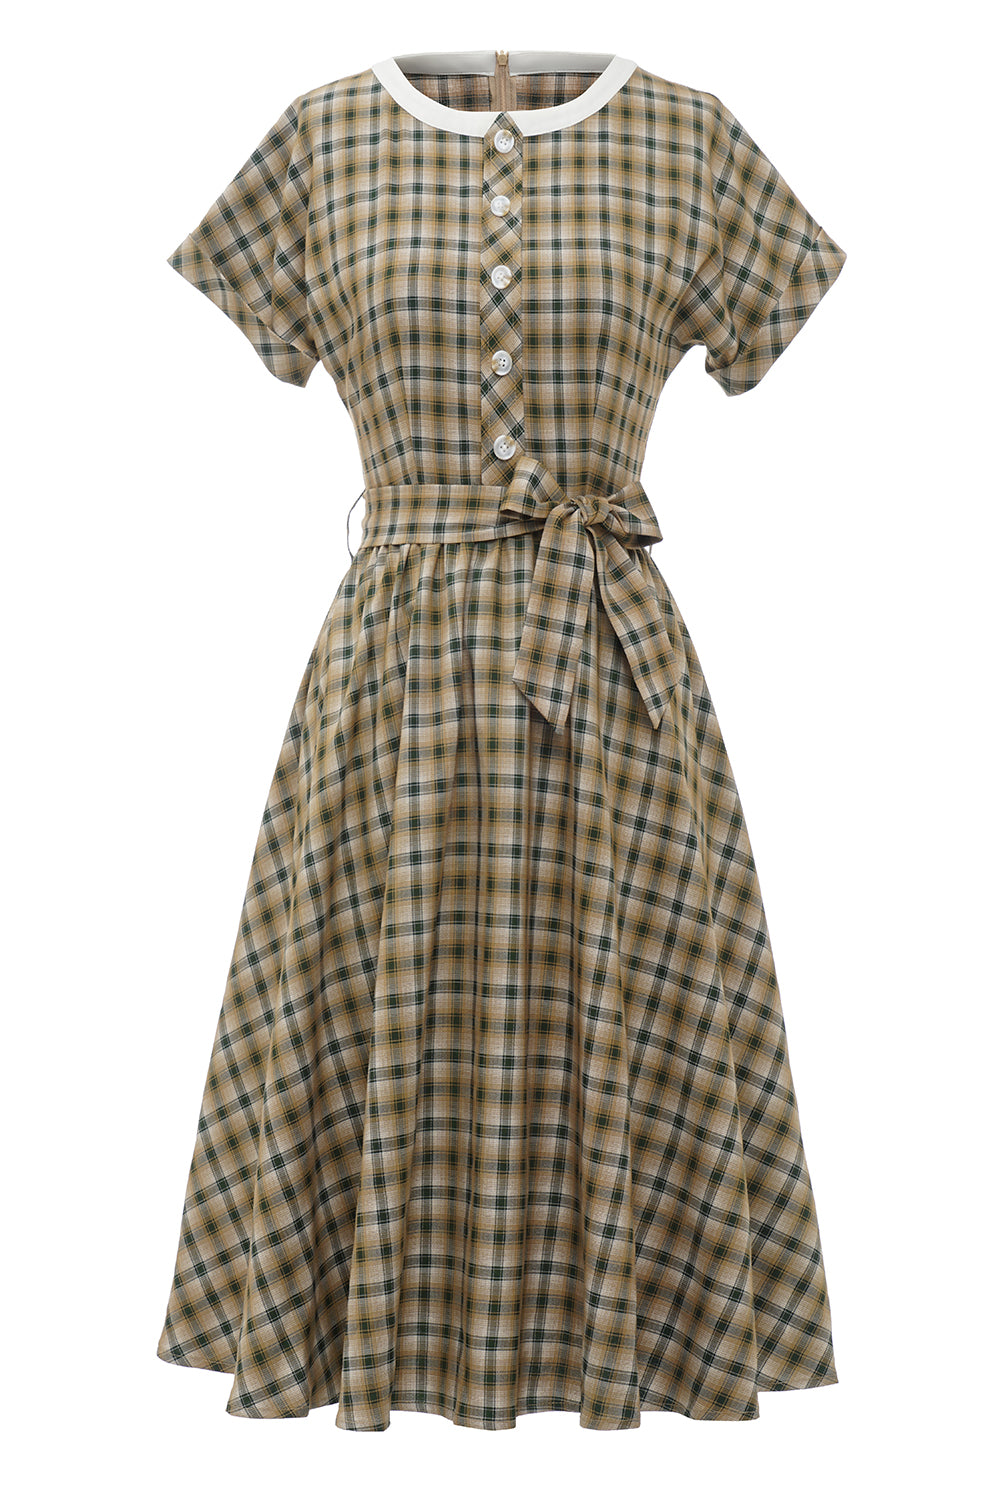 Khaki Grünes Gitter Kurze Ärmel 1950er Jahre Vintage Kleid